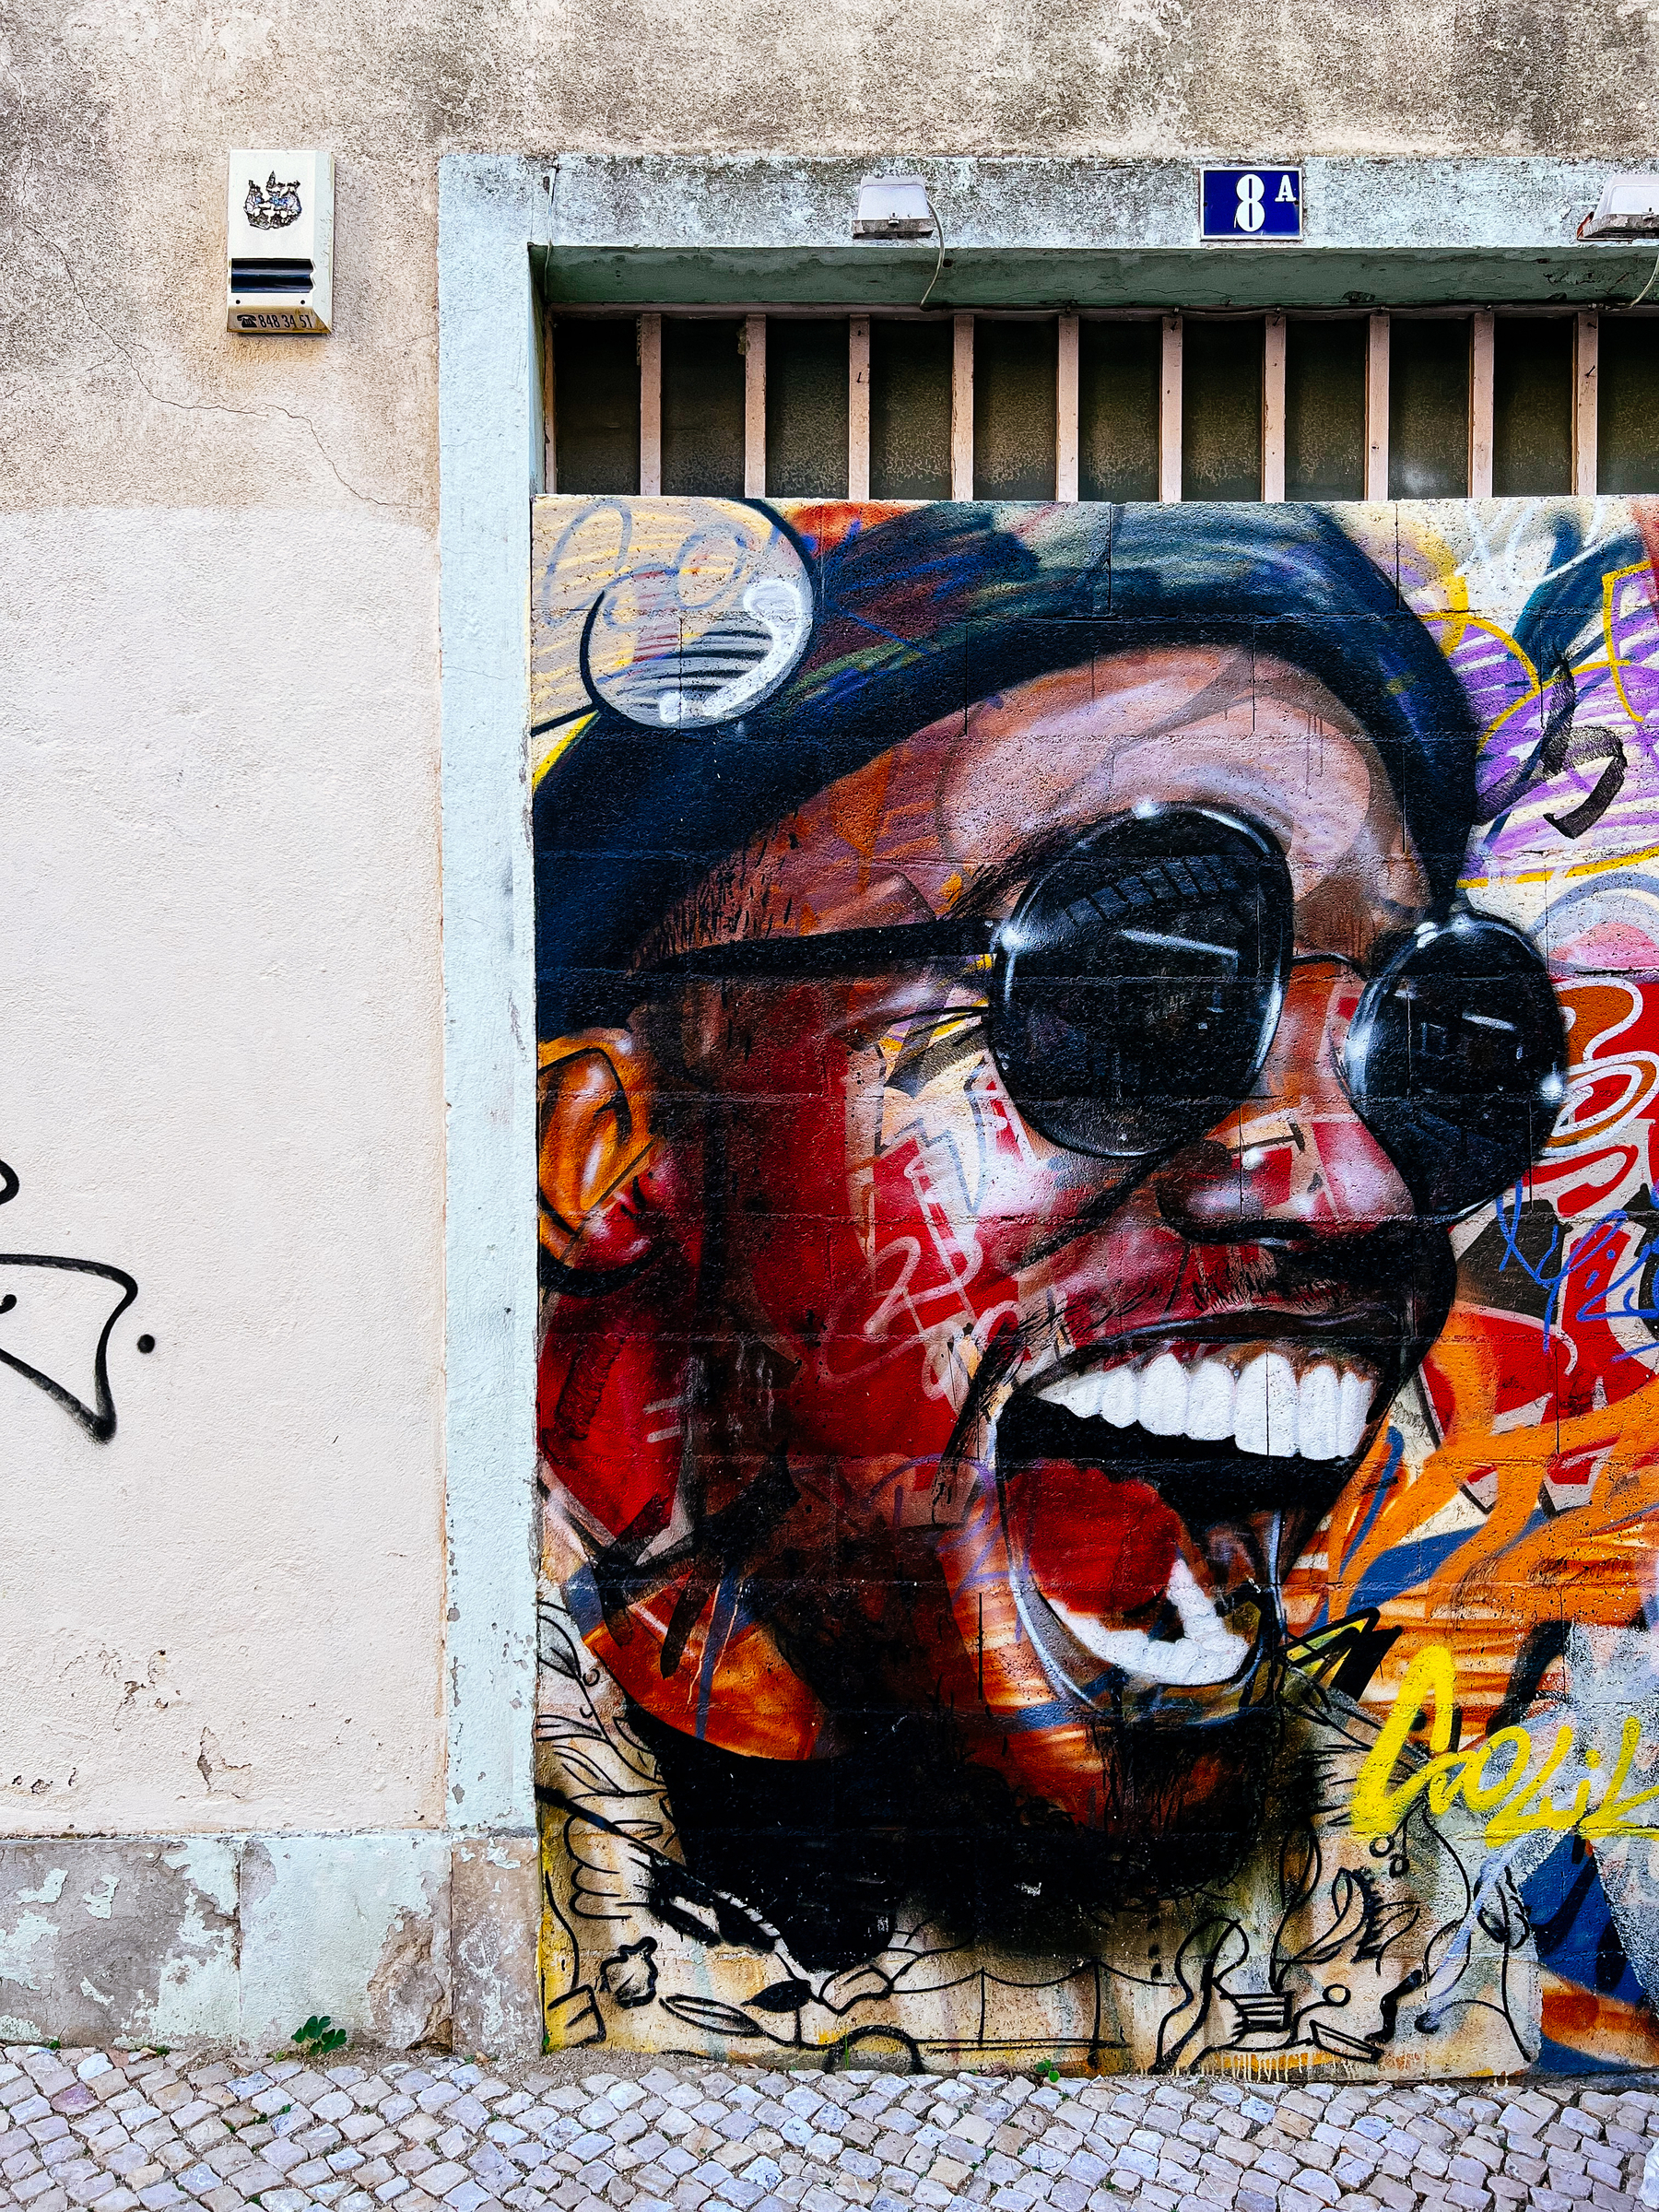 Street art, graffiti of a man yelling/singing 